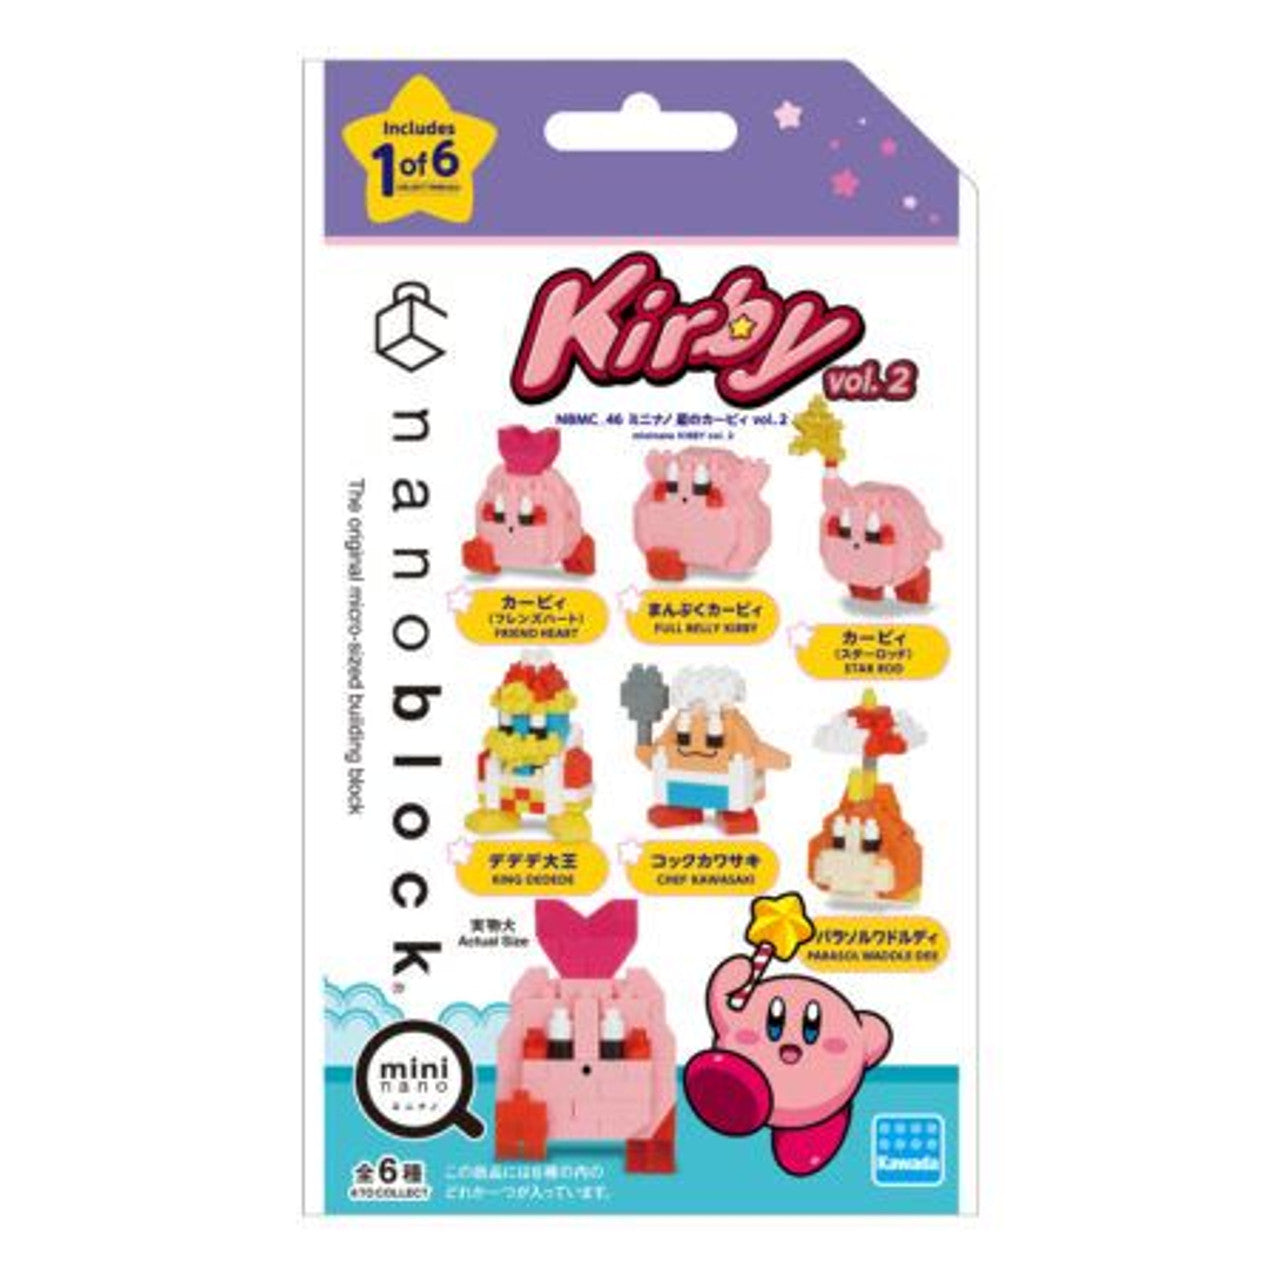 Nanoblock Mininano: Kirby Vol.2 Blind Pack